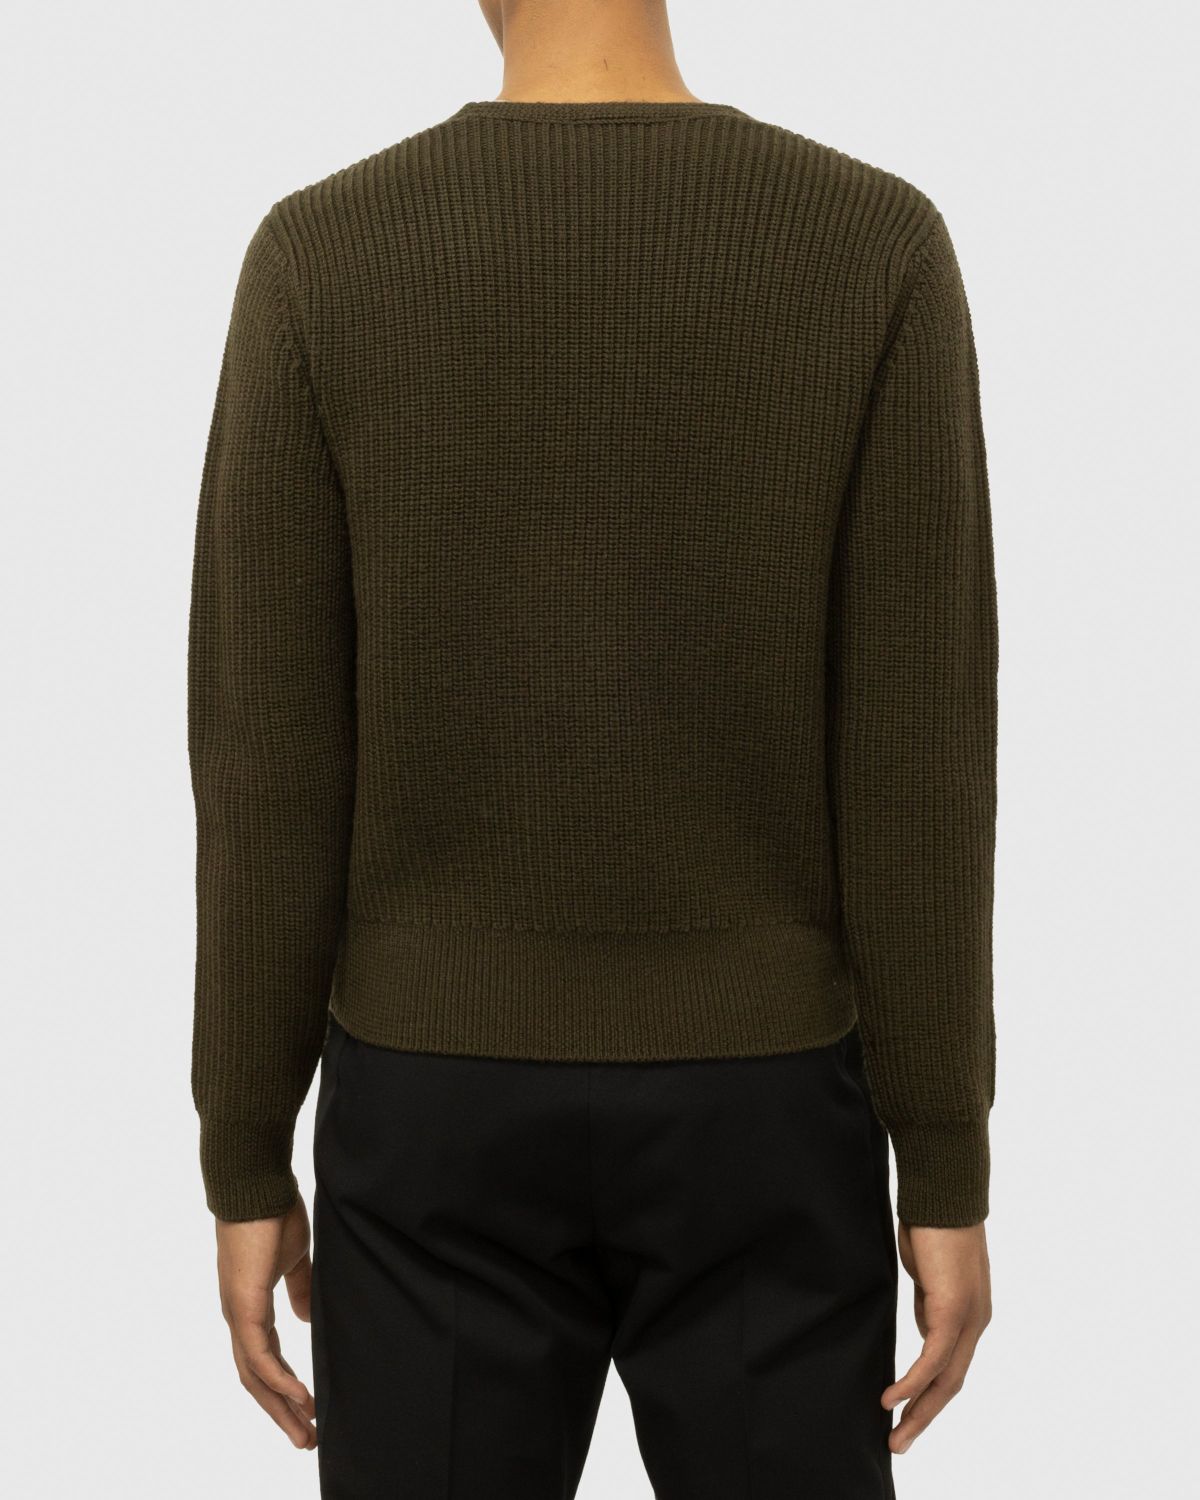 Dries van Noten – Newton Merino Sweater Green - Knitwear - Green - Image 5